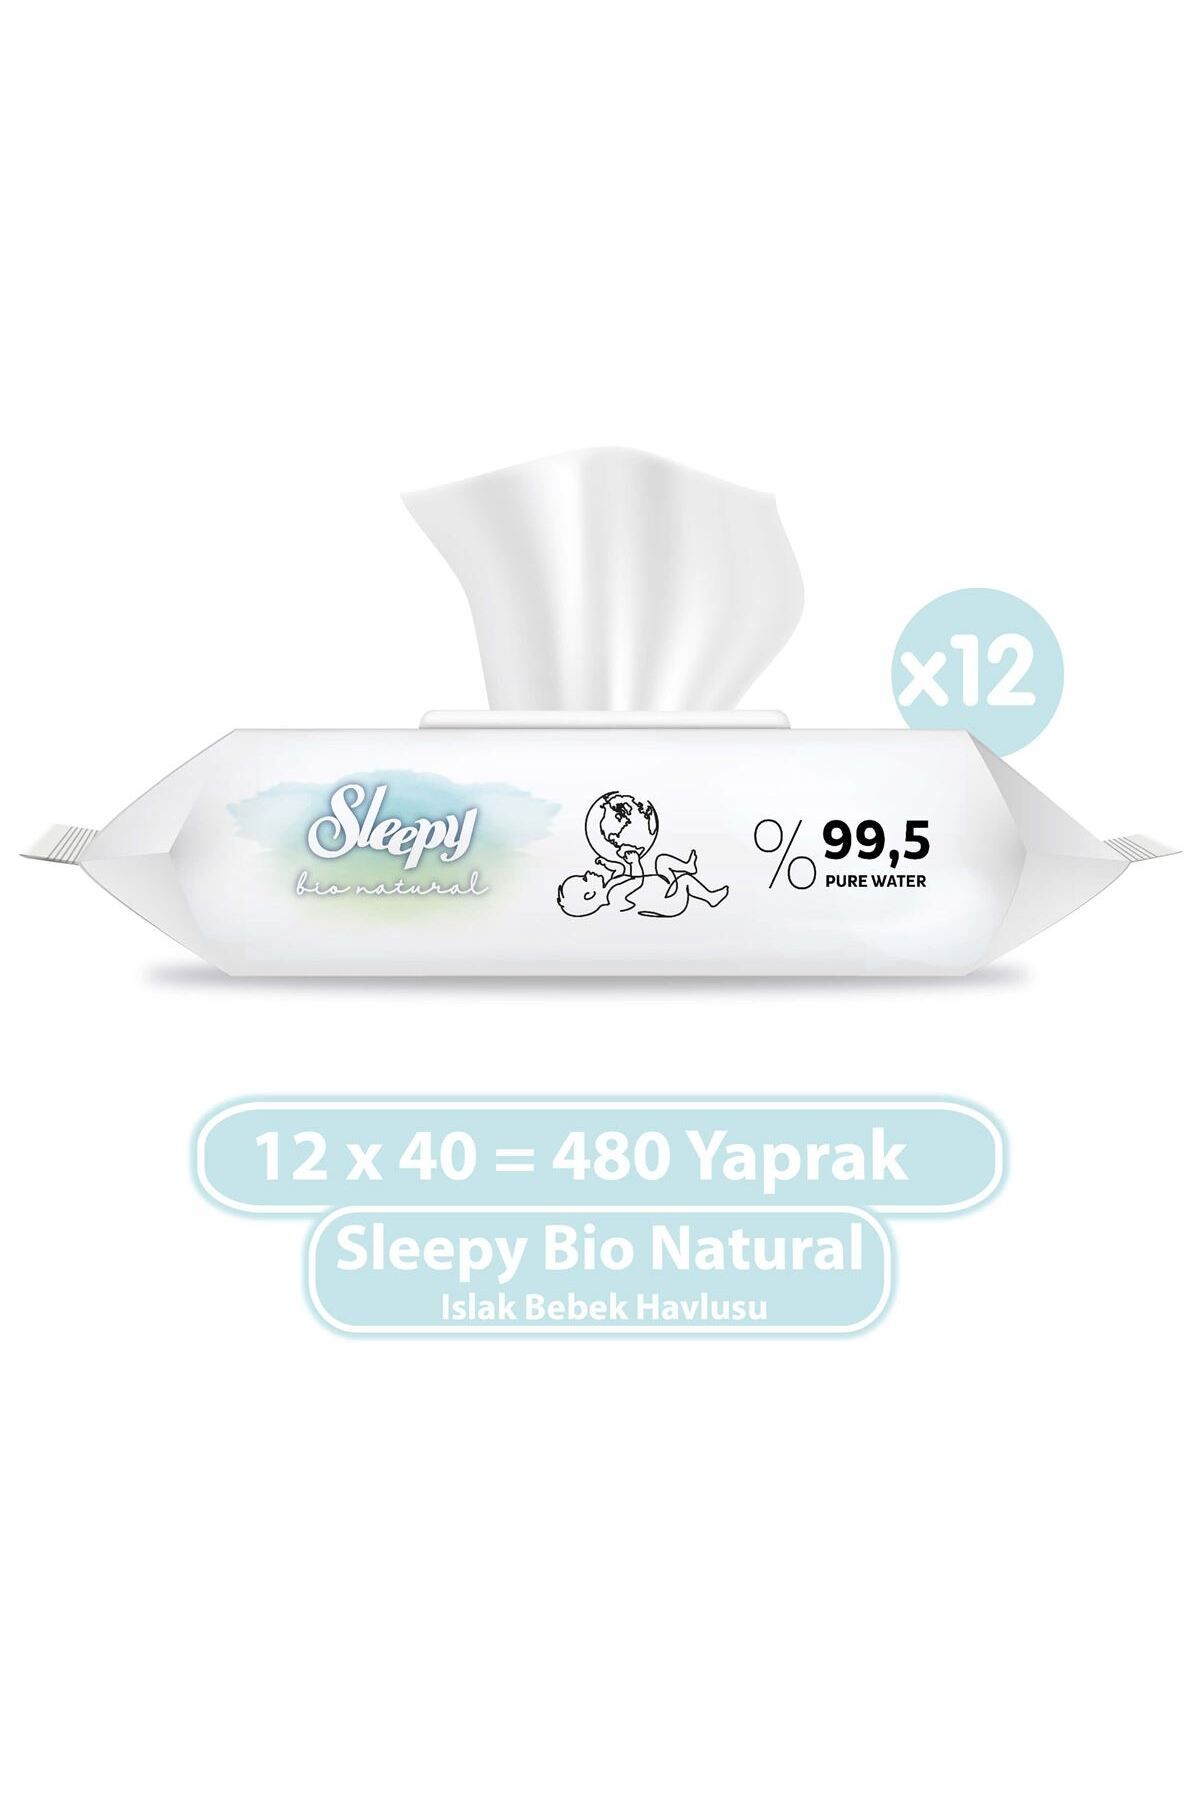 Sleepy Bio Natural Islak Bebek Havlusu 12x40 (480 Yaprak)